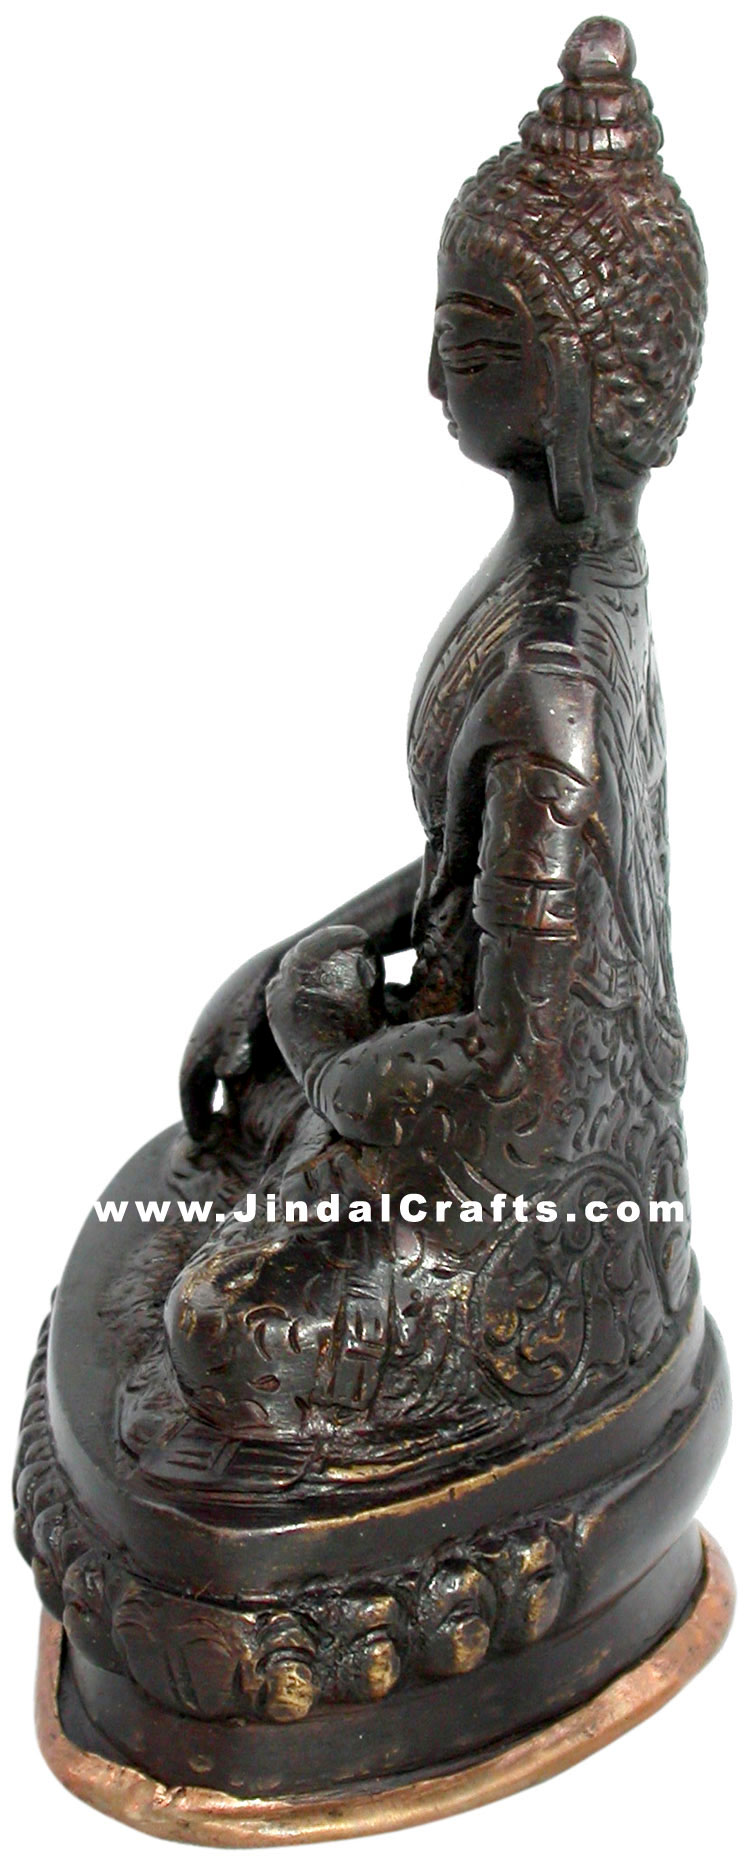 Antique Buddha Sculpture Buddhism Religious Bronze Idol